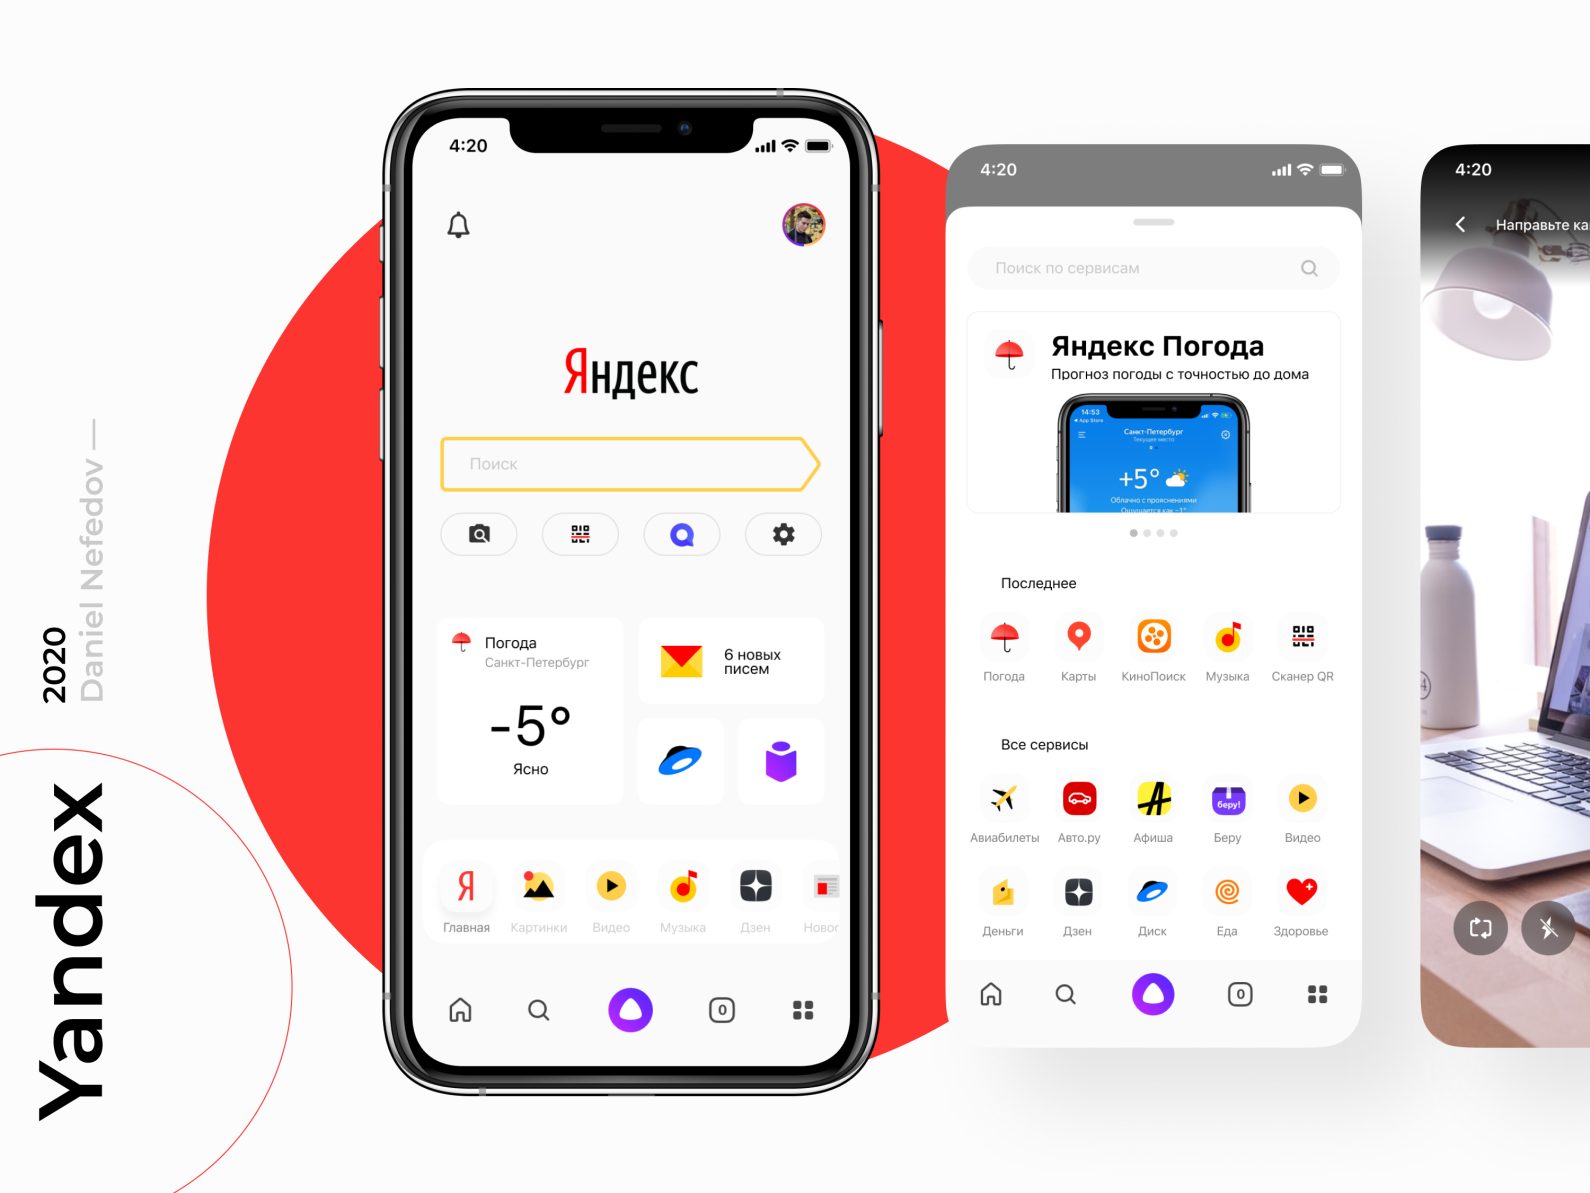 Yandex app - redesign 2020 by Daniel Nefedov on Dribbble